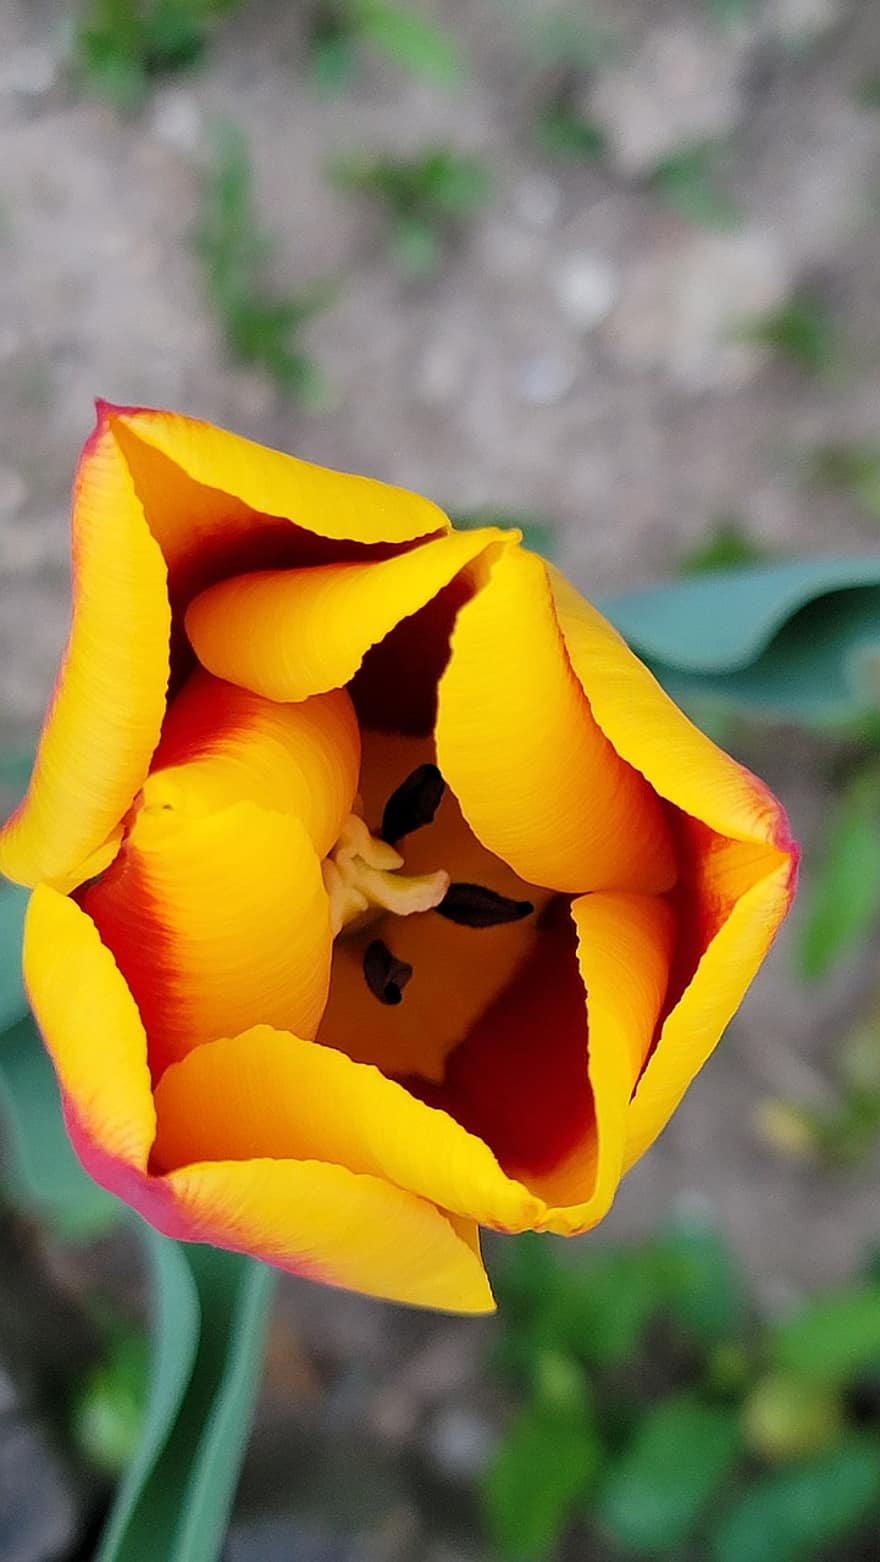 тюльпан, цветок, завод, садовый тюльпан, оранжевый тюльпан, оранжевый цветок, лепестки, цветение, весна, природа